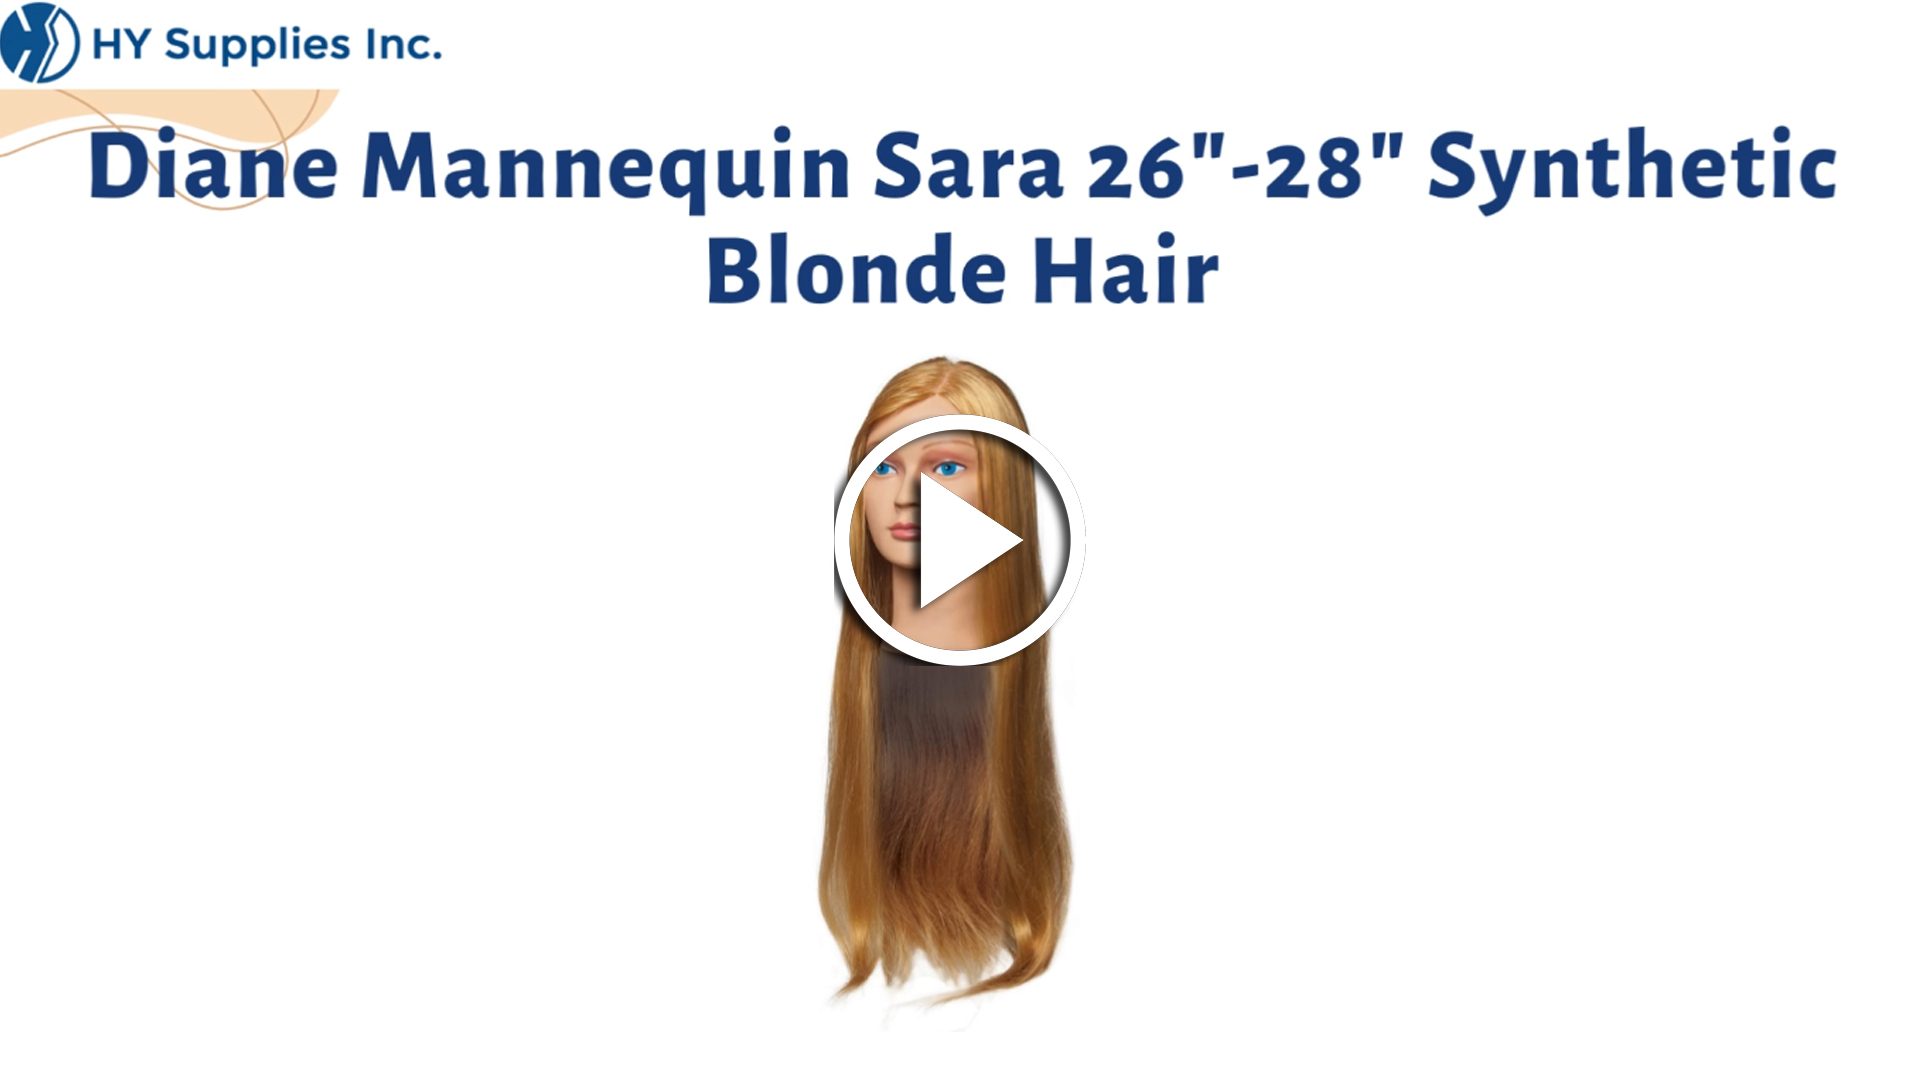 Diane Mannequin Sara 26"-28"Synthetic Blonde Hair